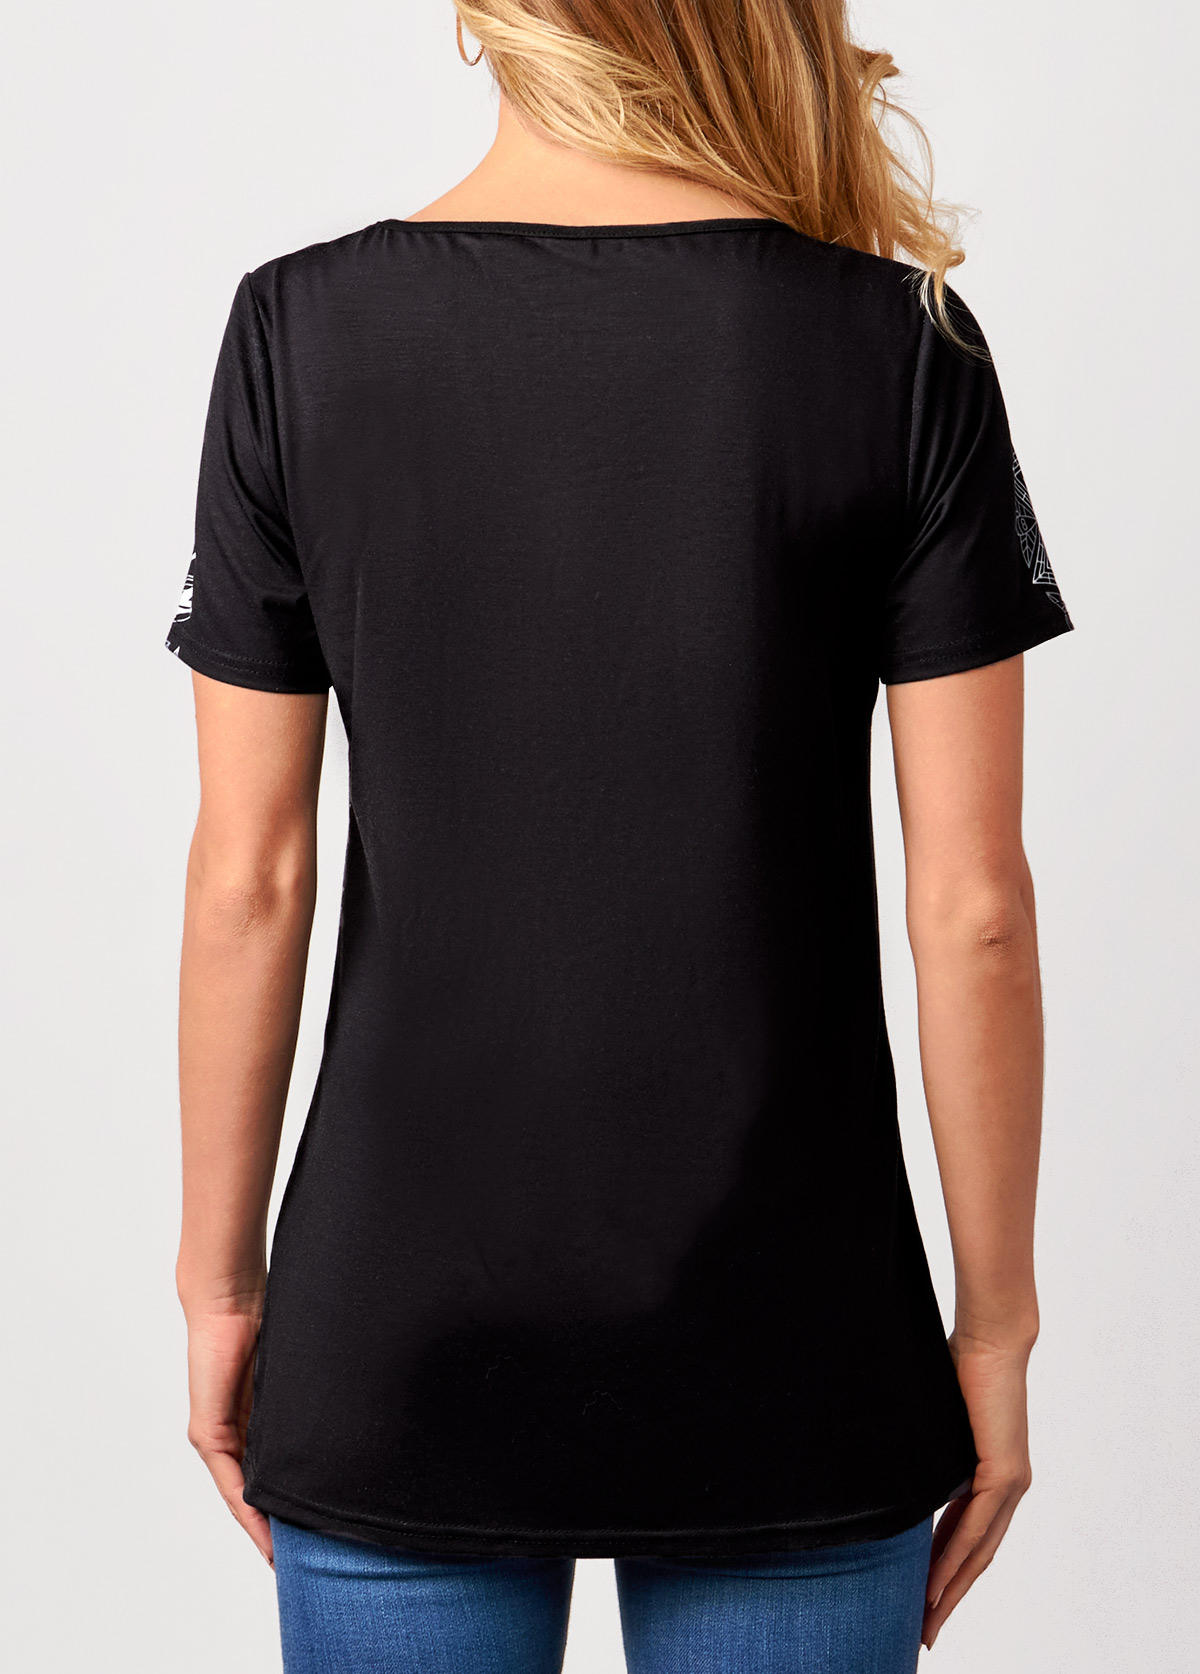 Tribal Print Black Short Sleeve T Shirt